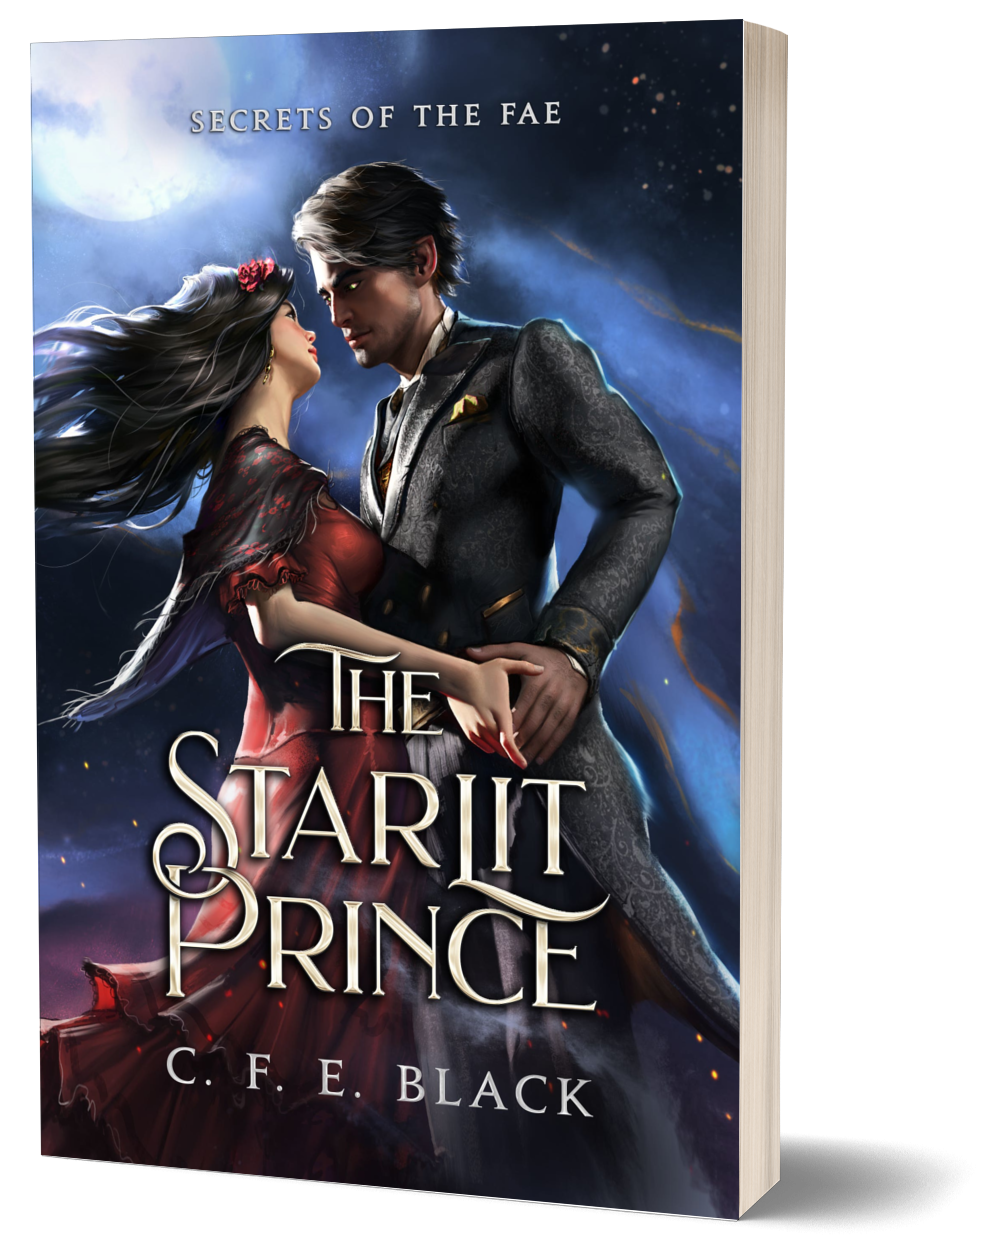 The Starlit Prince Fantasy Romance paperback book cover